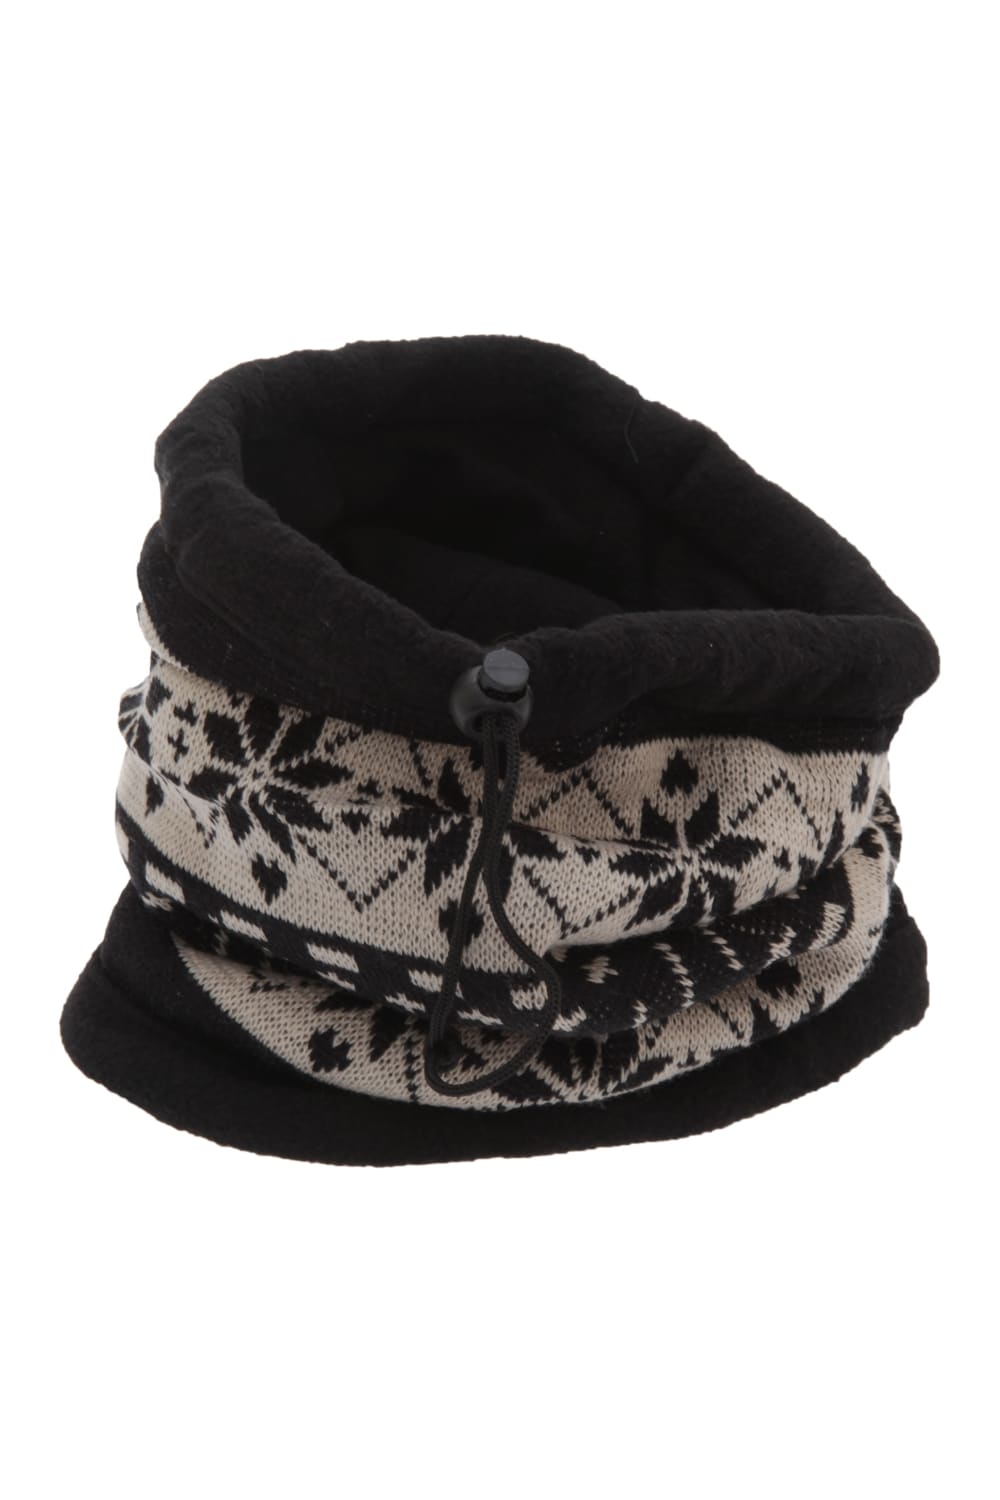 Unisex Patterned Snowflake Design Multifunctional Winter Hat / Snood / Mask (Black/Beige)